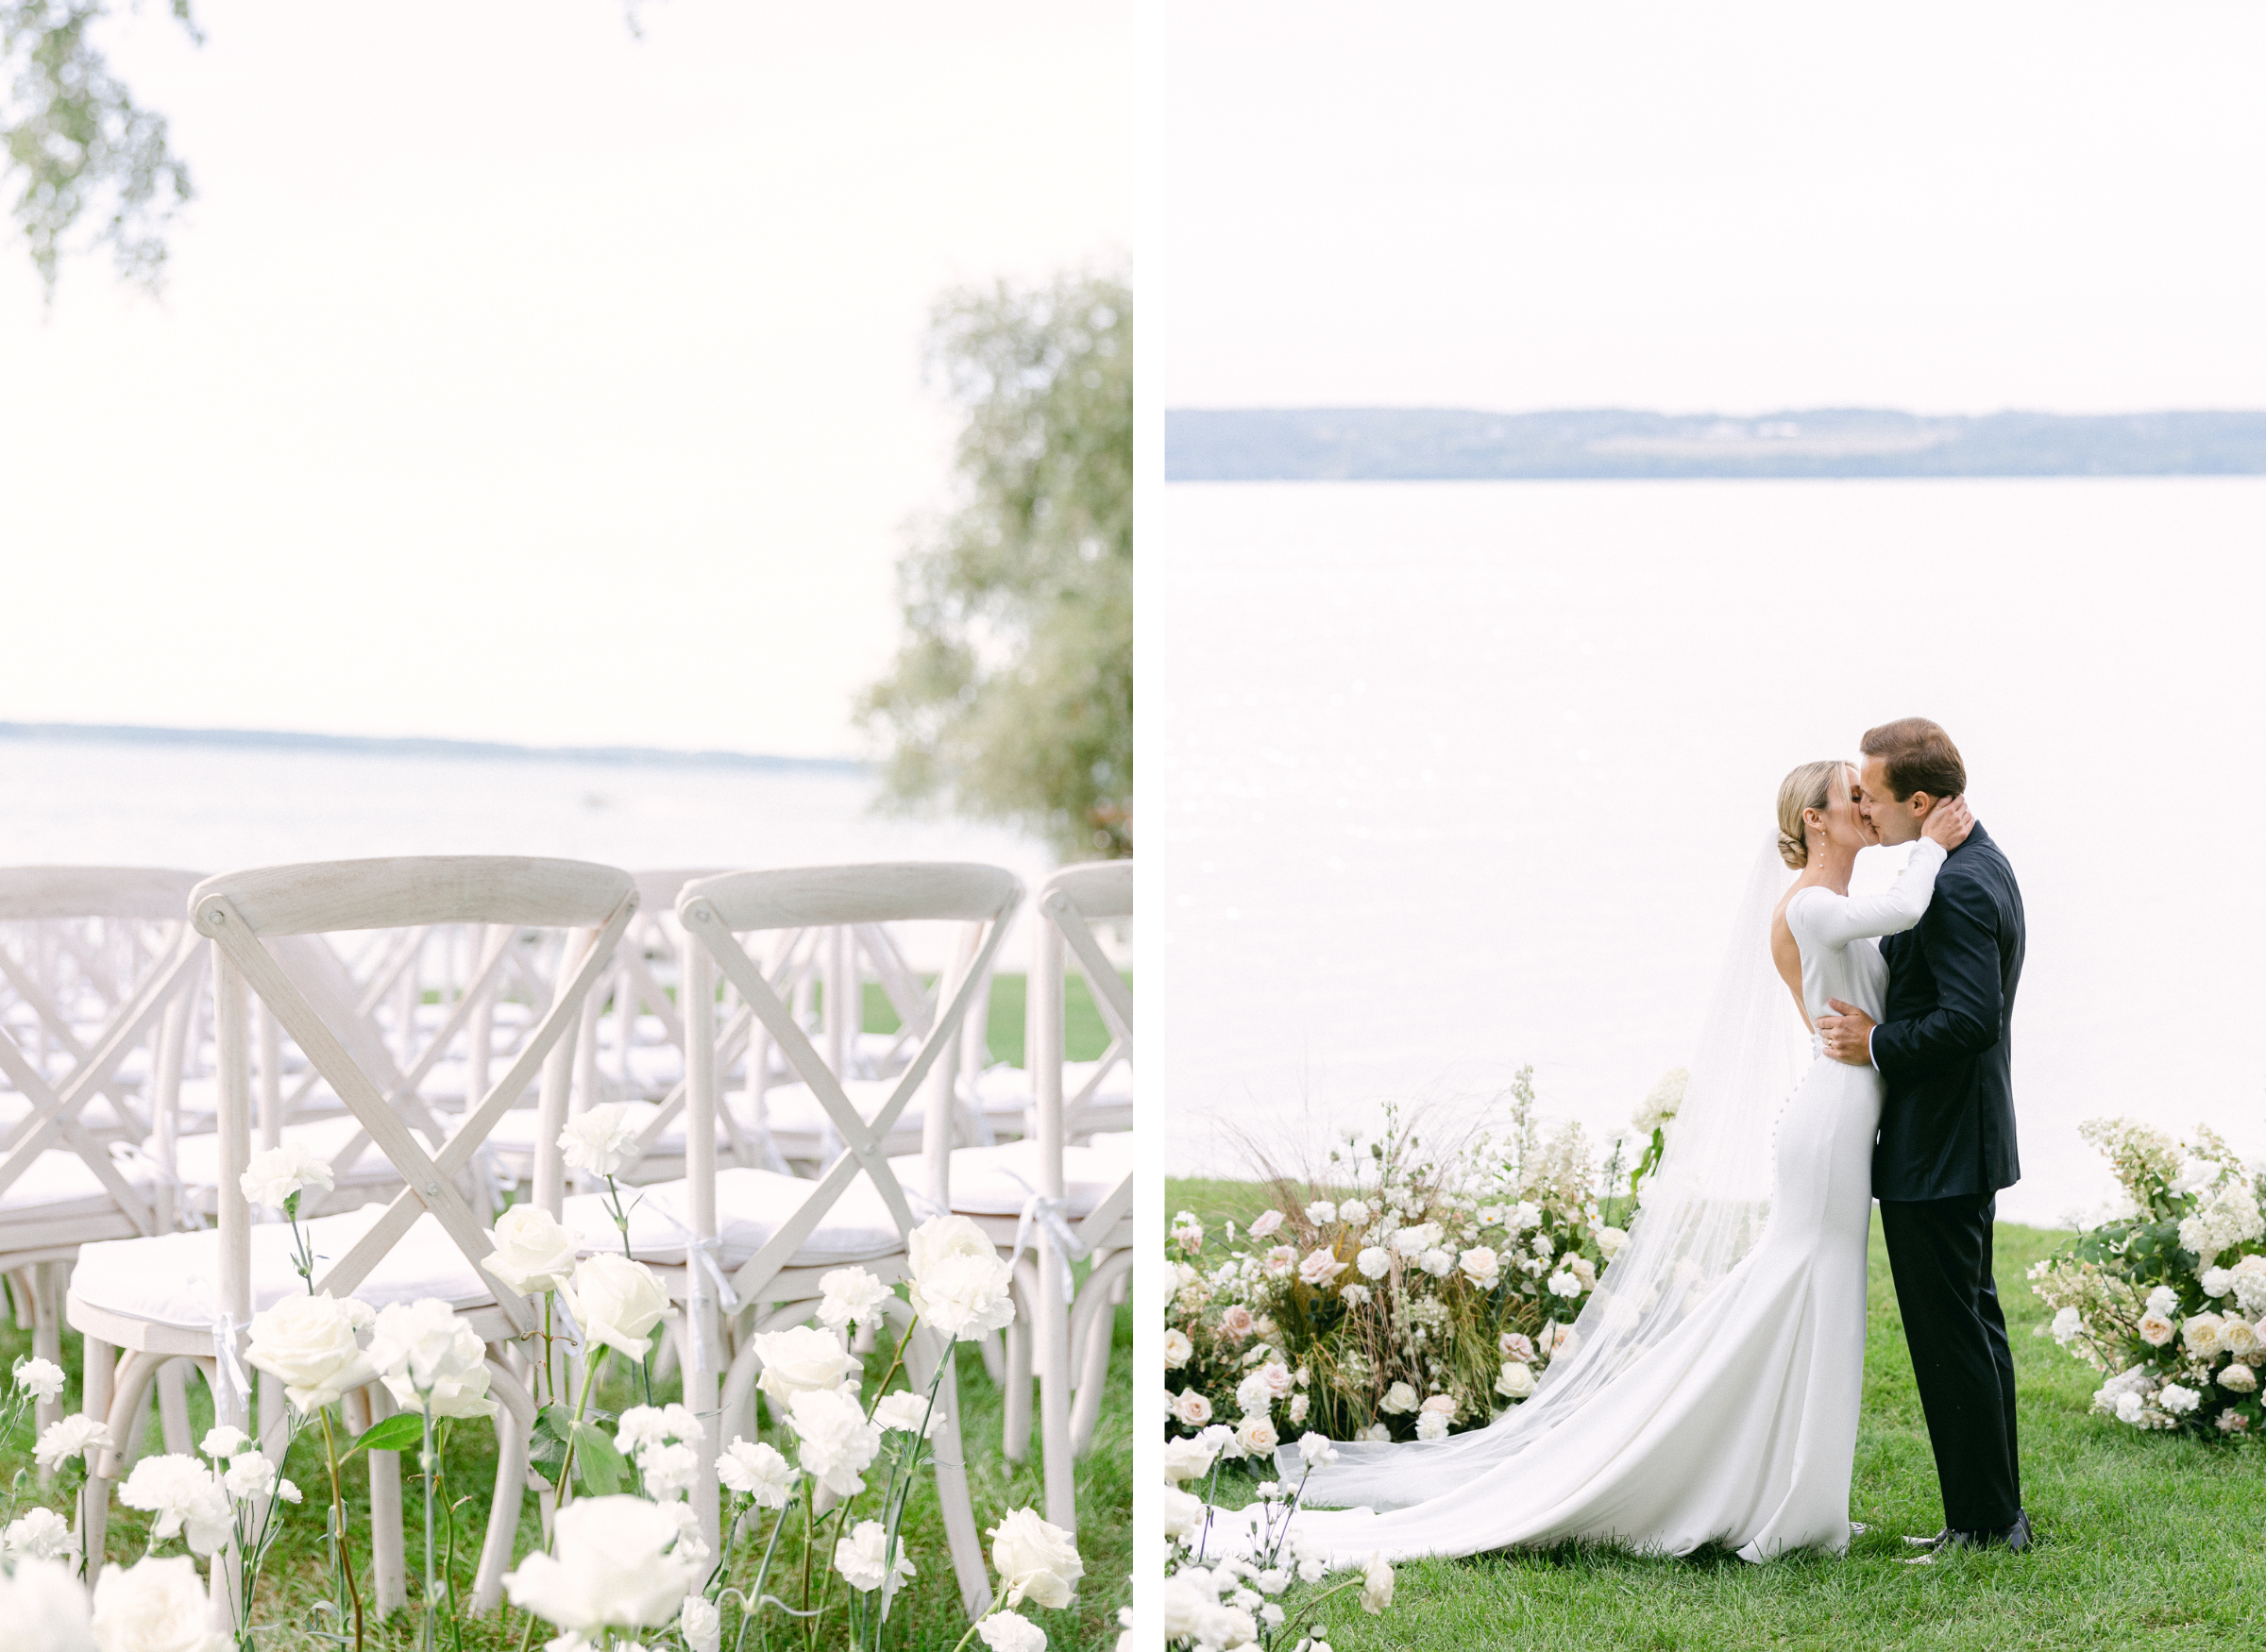 shley & Max's Modern Fall Inns of Aurora Wedding_Ceremony_Verve Event Co.